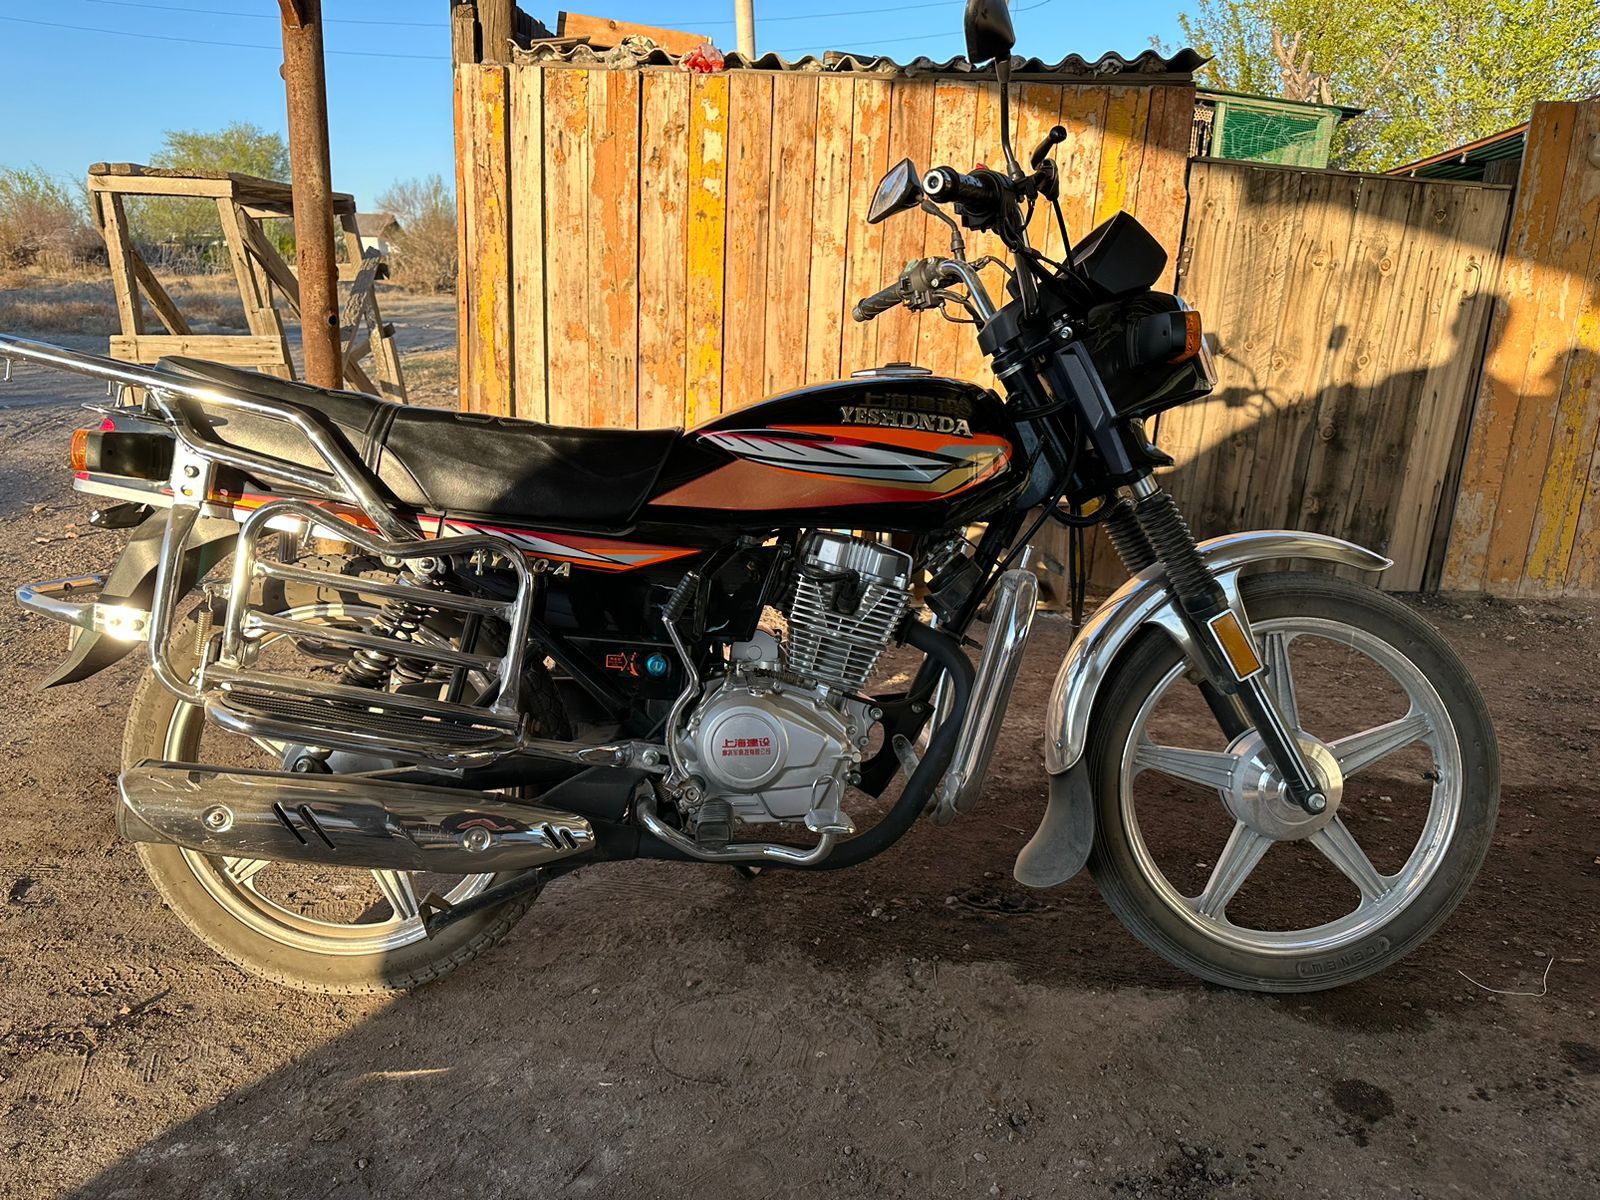 Мотоцикл Yeshdnda 150 cc